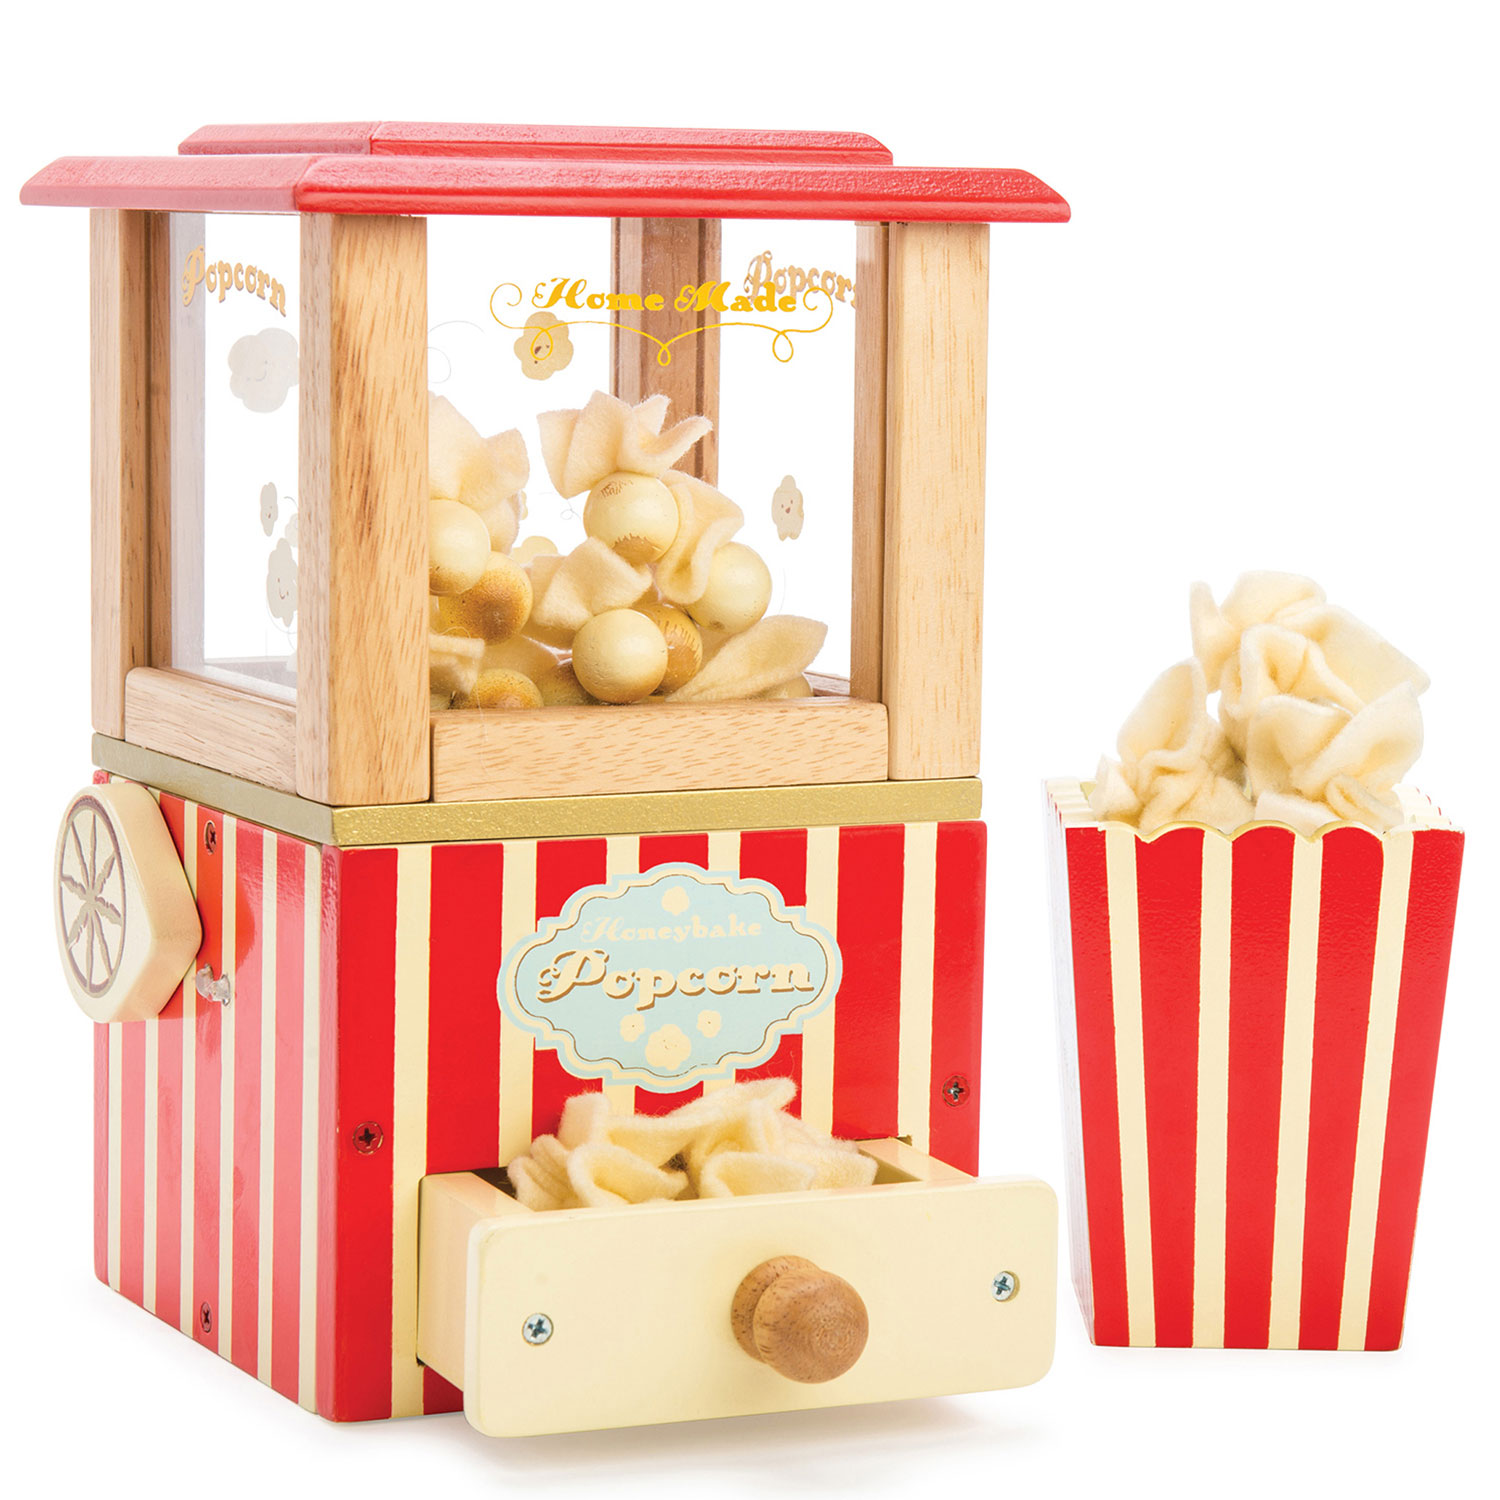 Popcornmaschine / Vintage Popcorn Maker